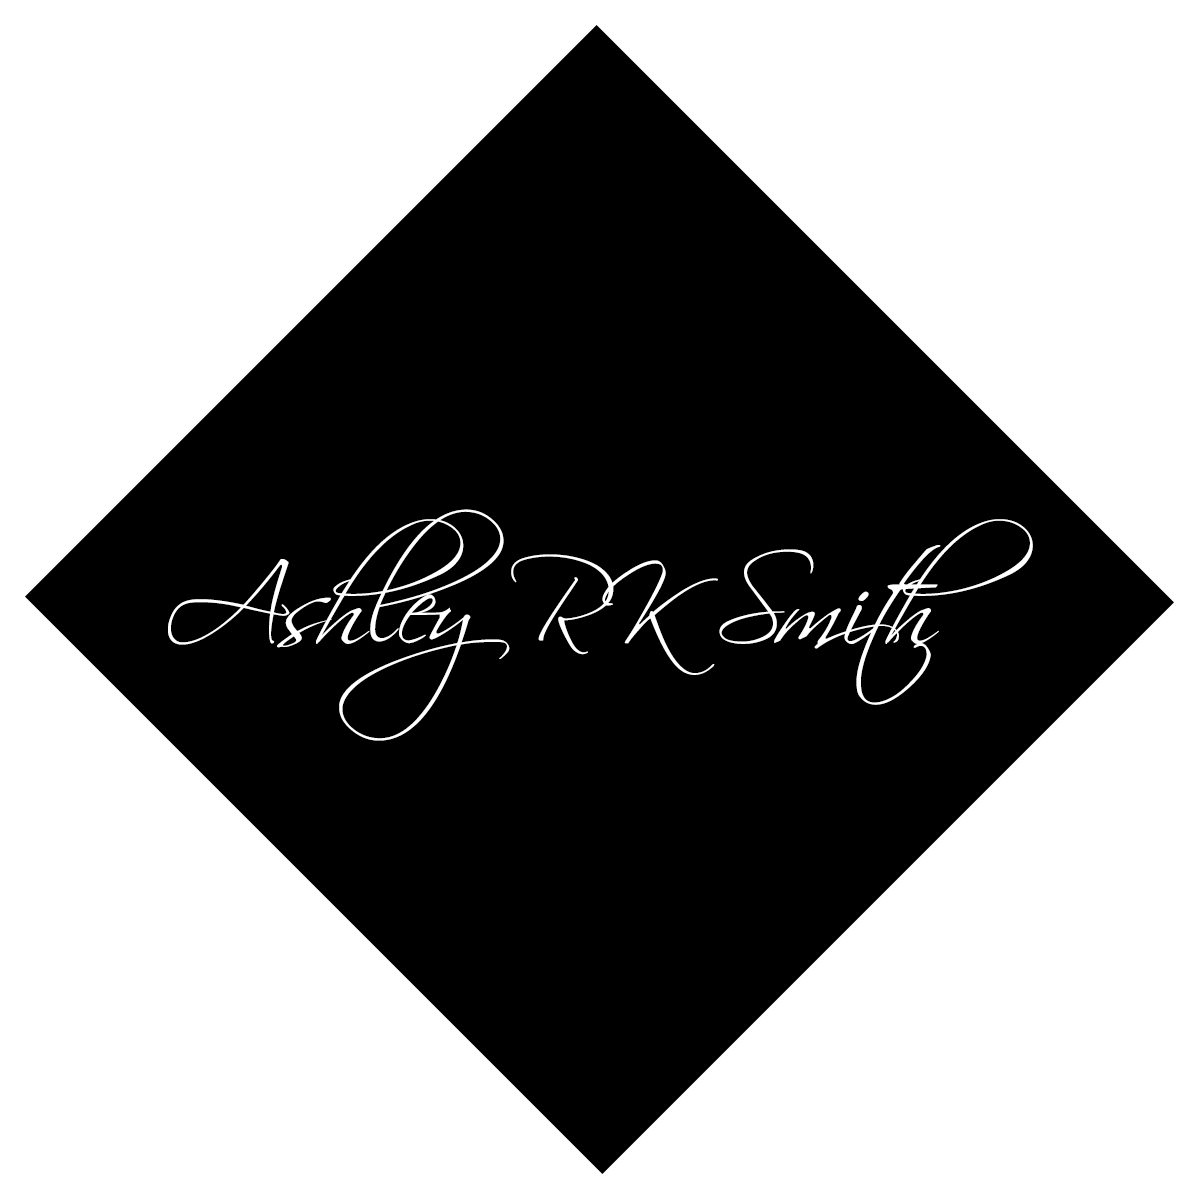 Ashley_RK_Smith logo